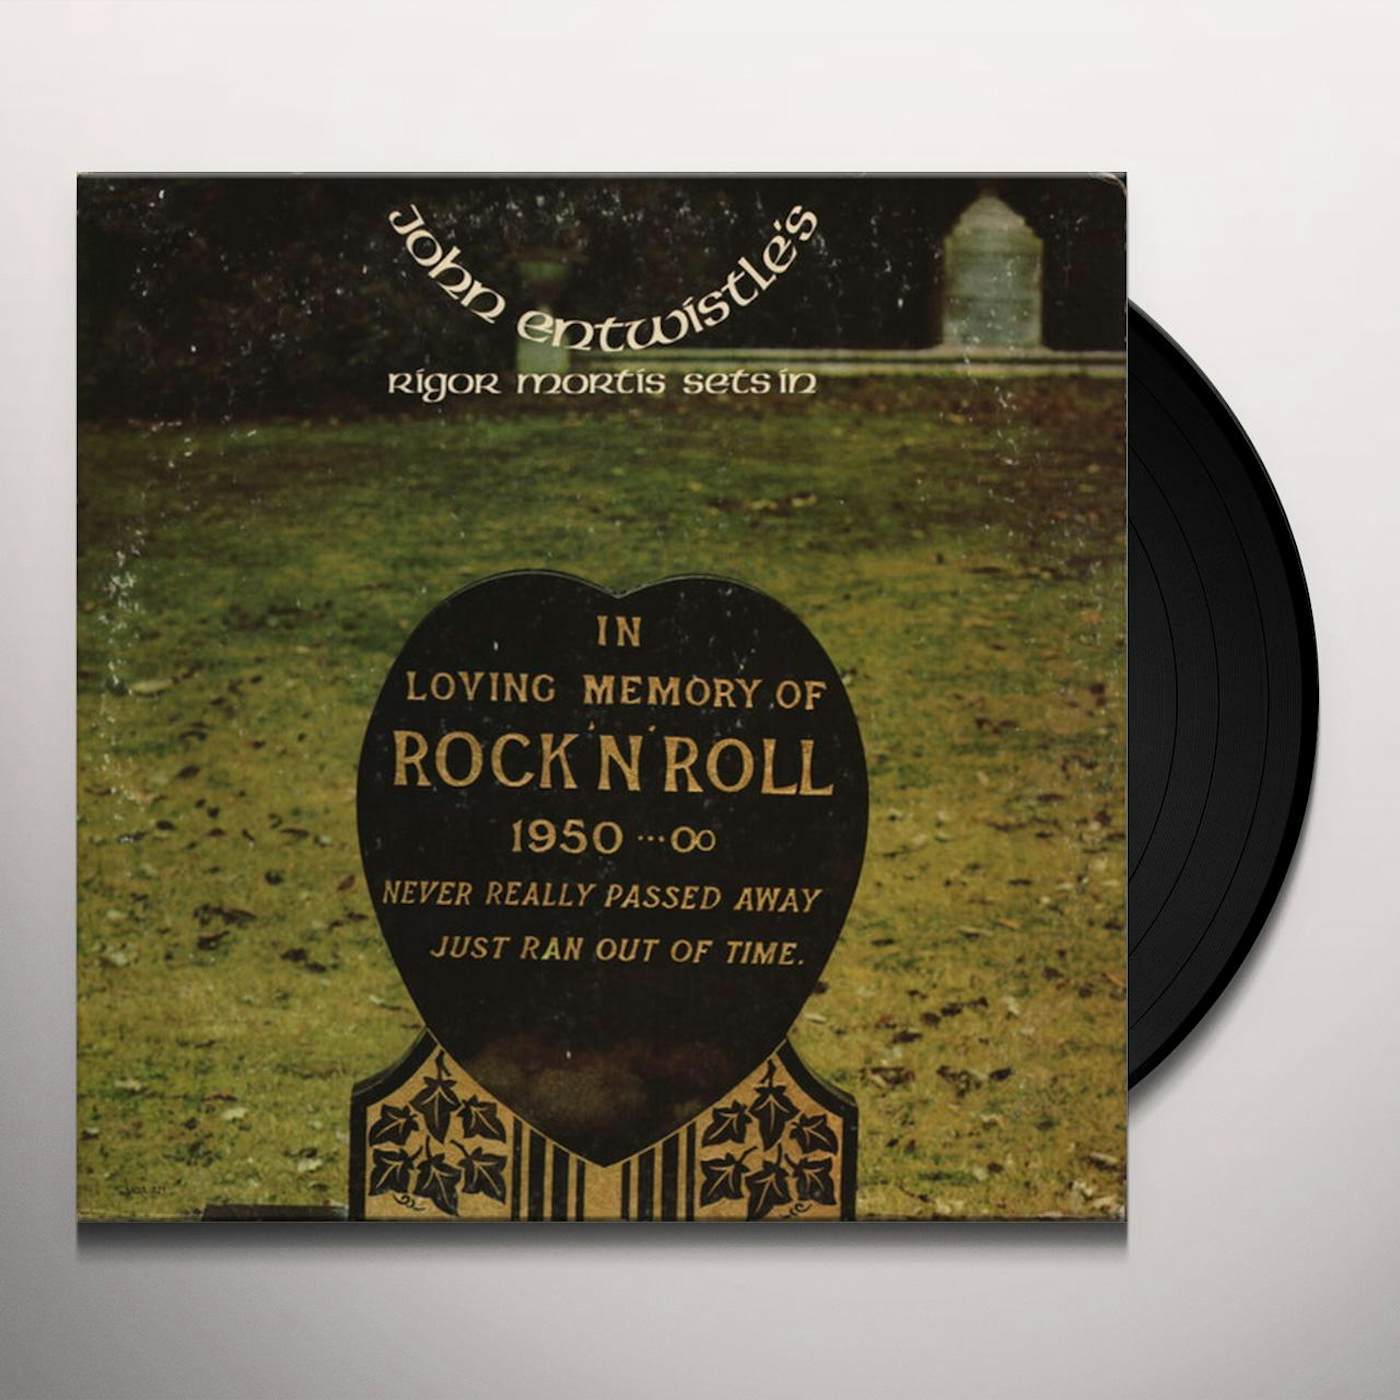 John Entwistle Rigor Mortis Sets In Vinyl Record